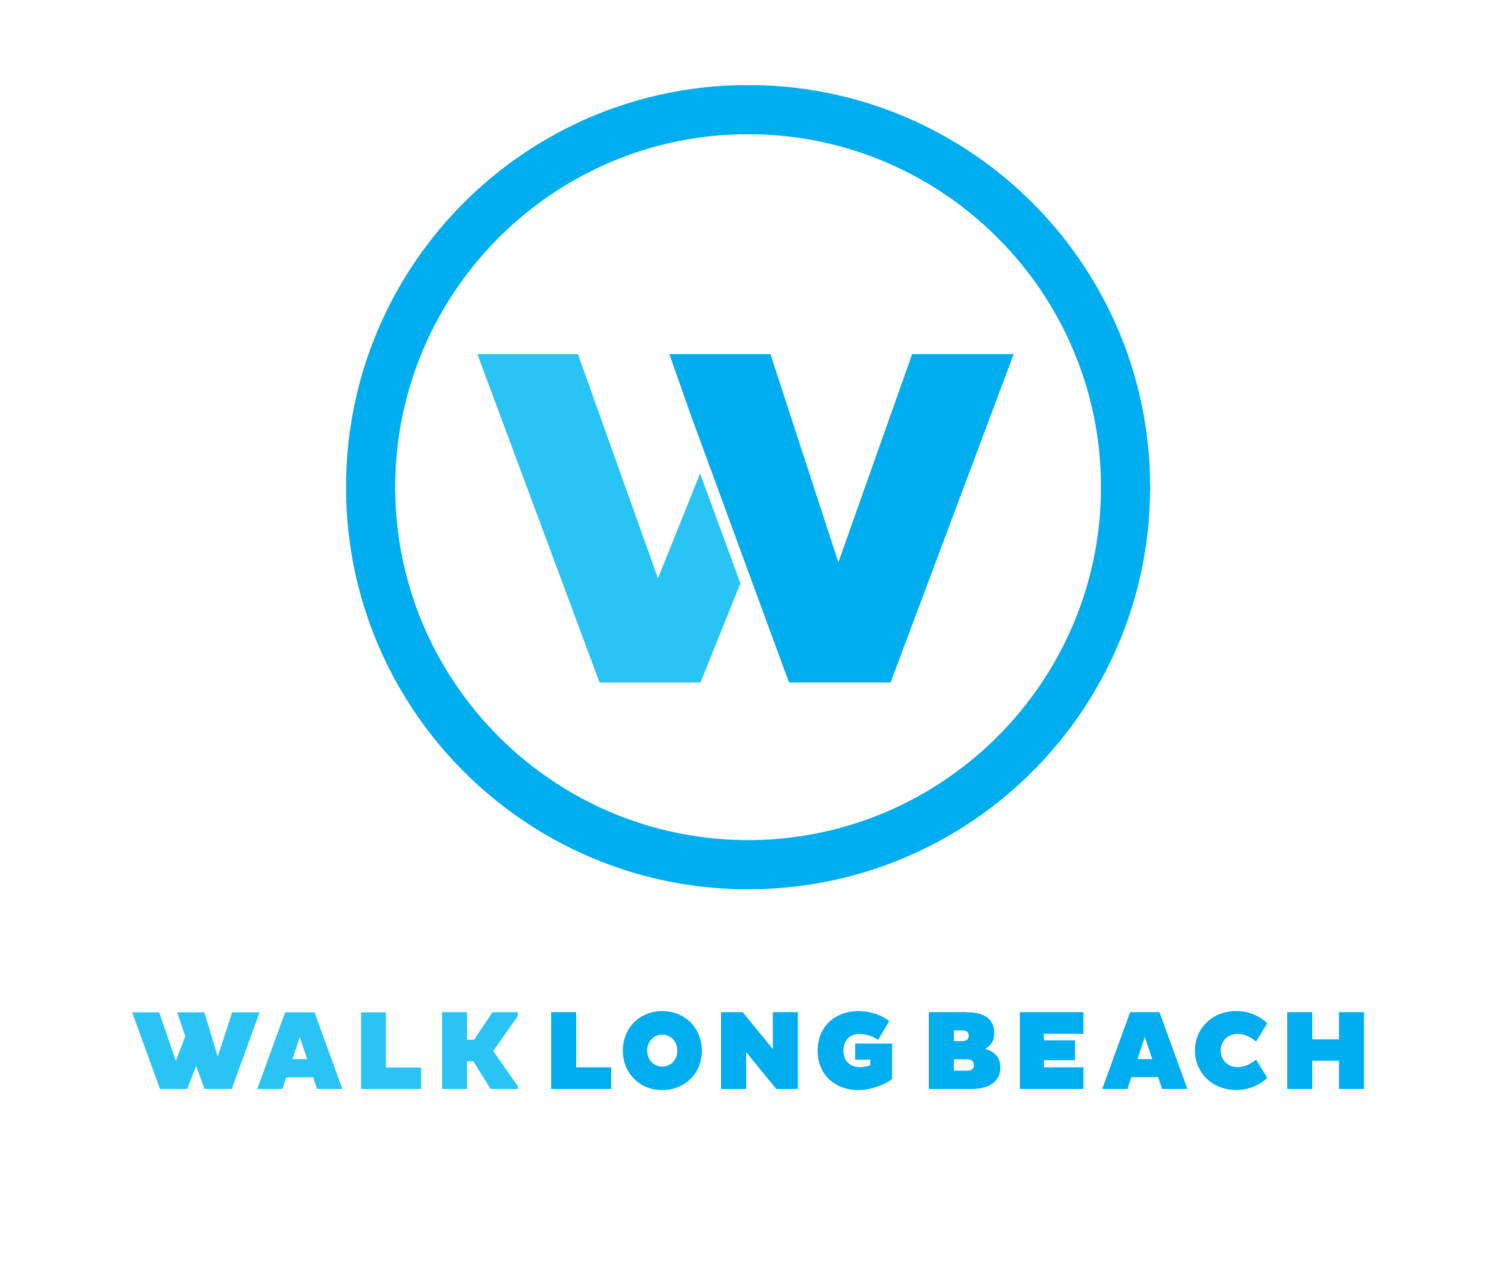 Walk Long Beach